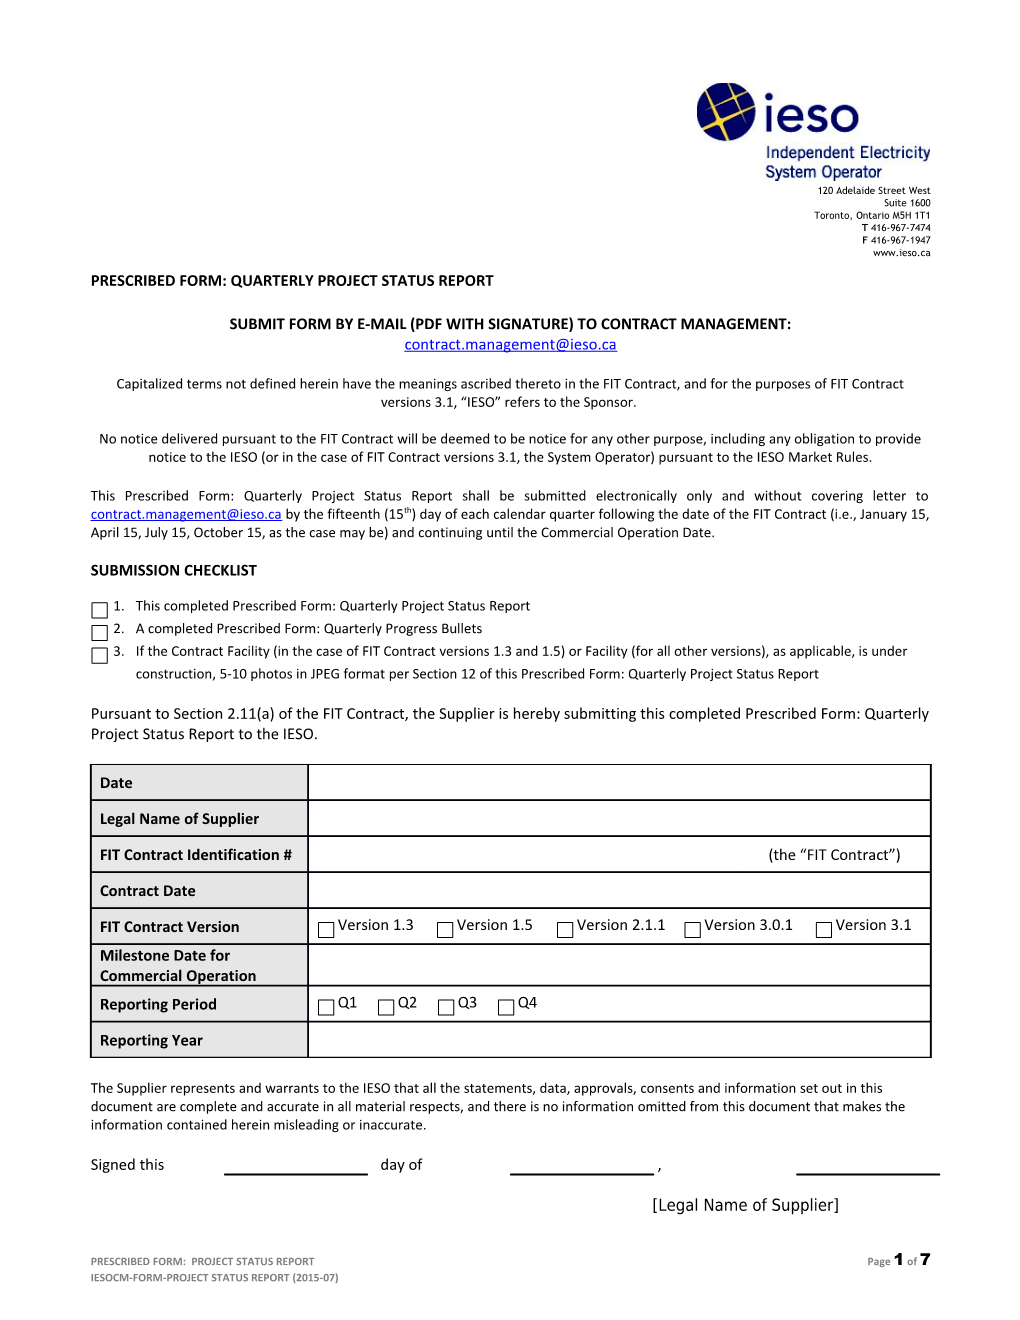 Prescribed Form - Quarterly Project Status Report